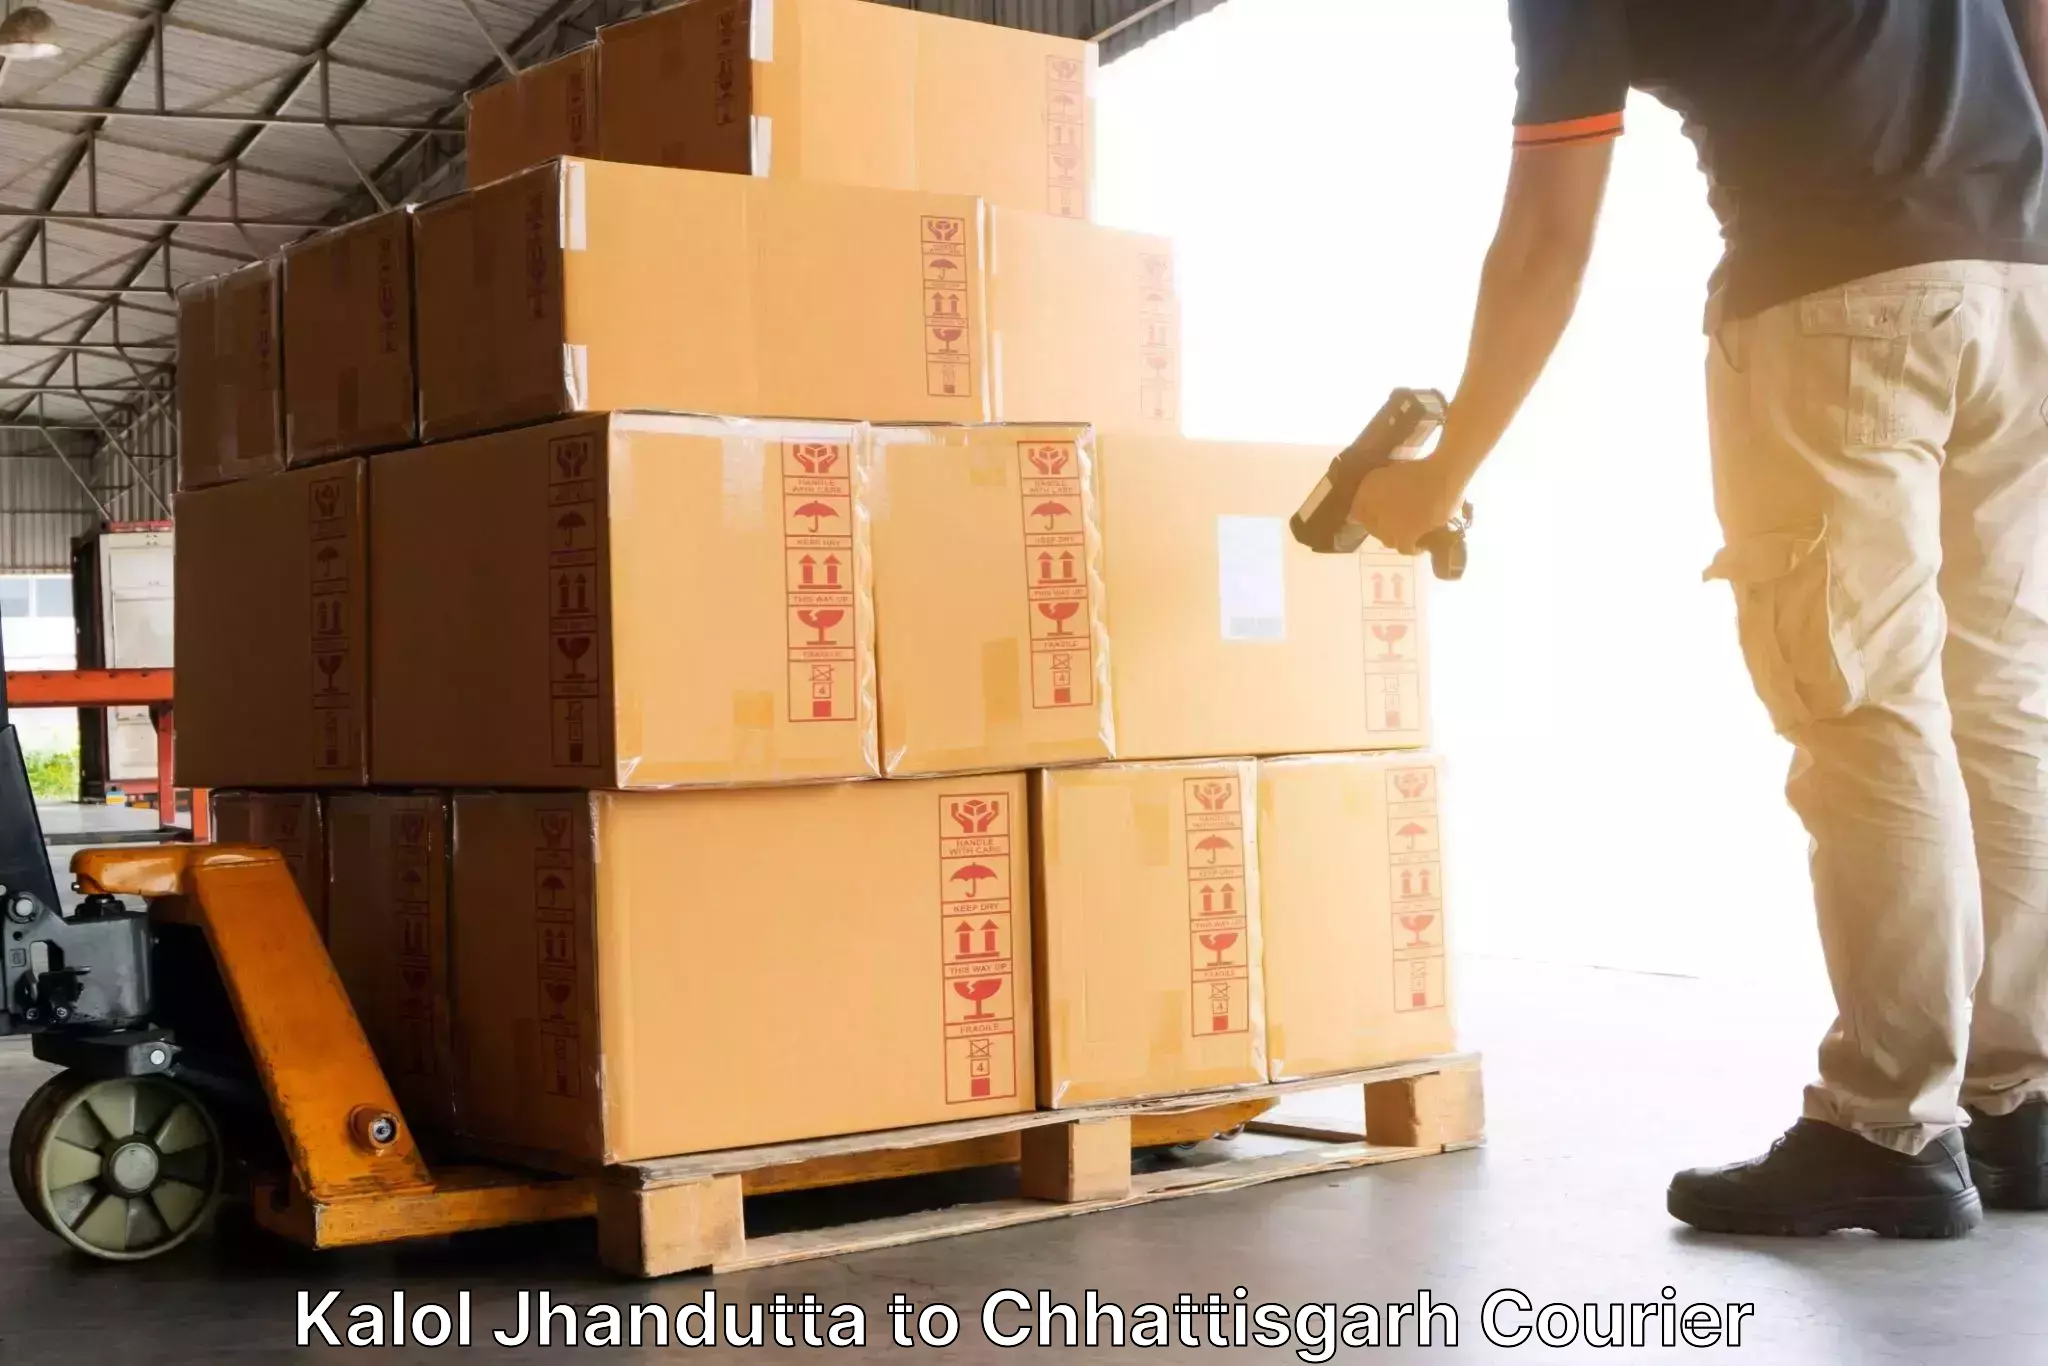 Custom courier packaging Kalol Jhandutta to Berla